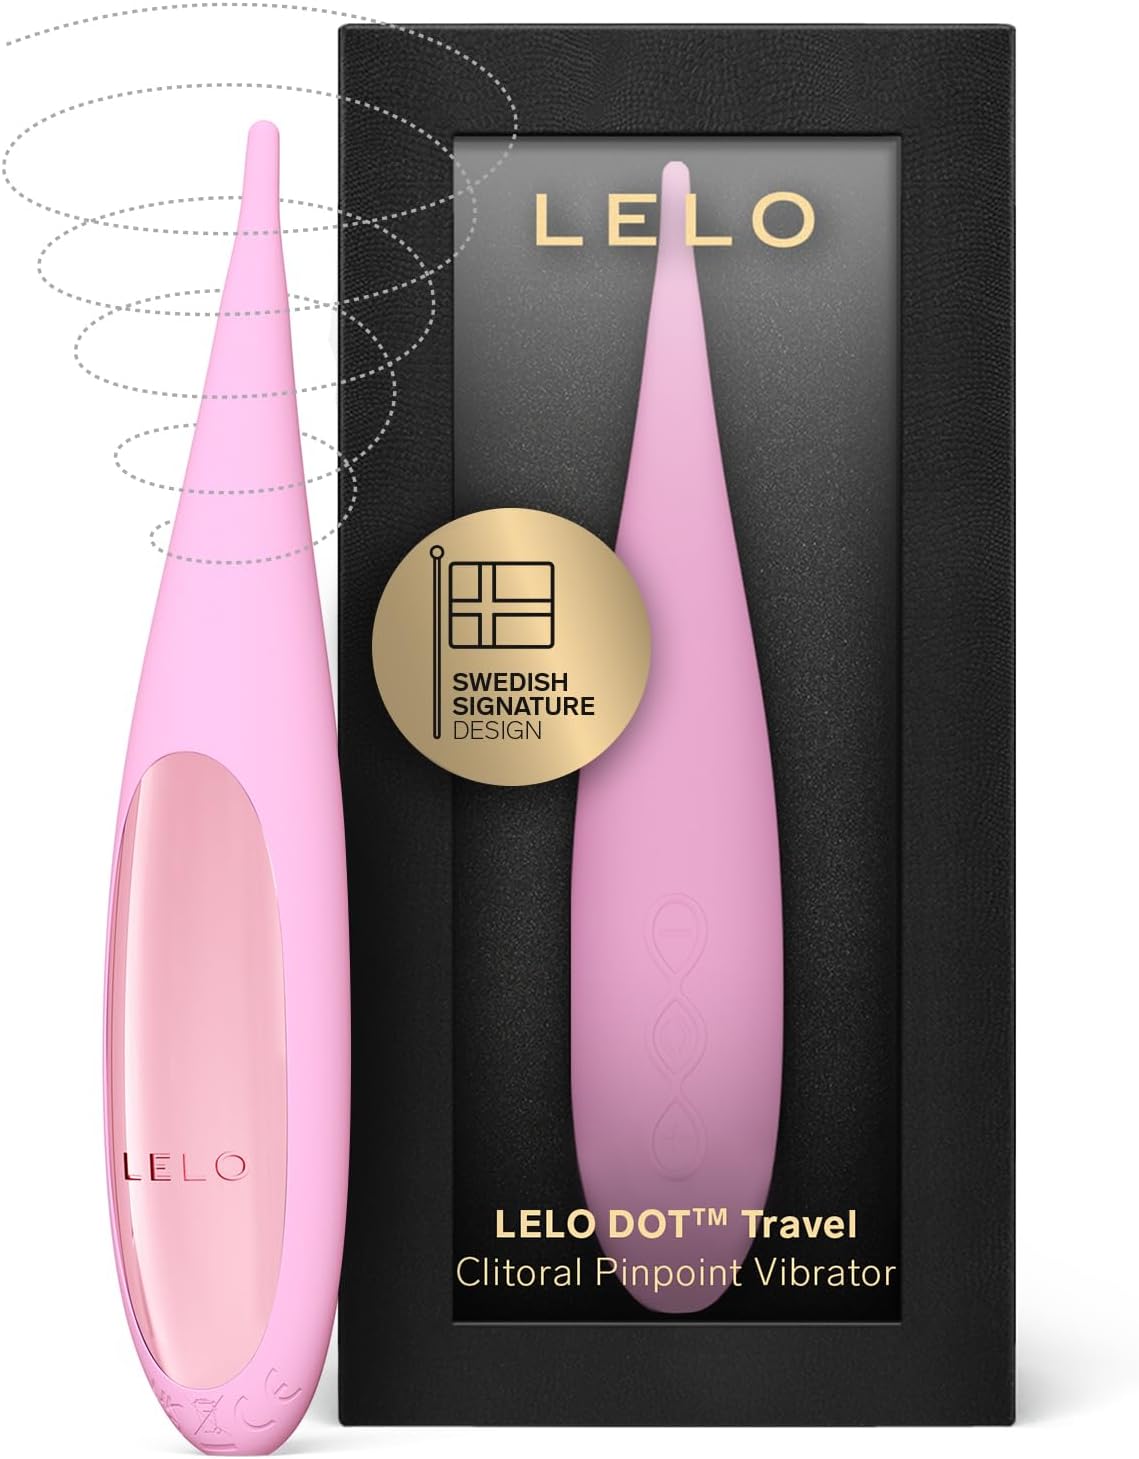 25439-lelo-dot-travel-clitoral-vibrator-pink-LOVE-SHOP-Cy